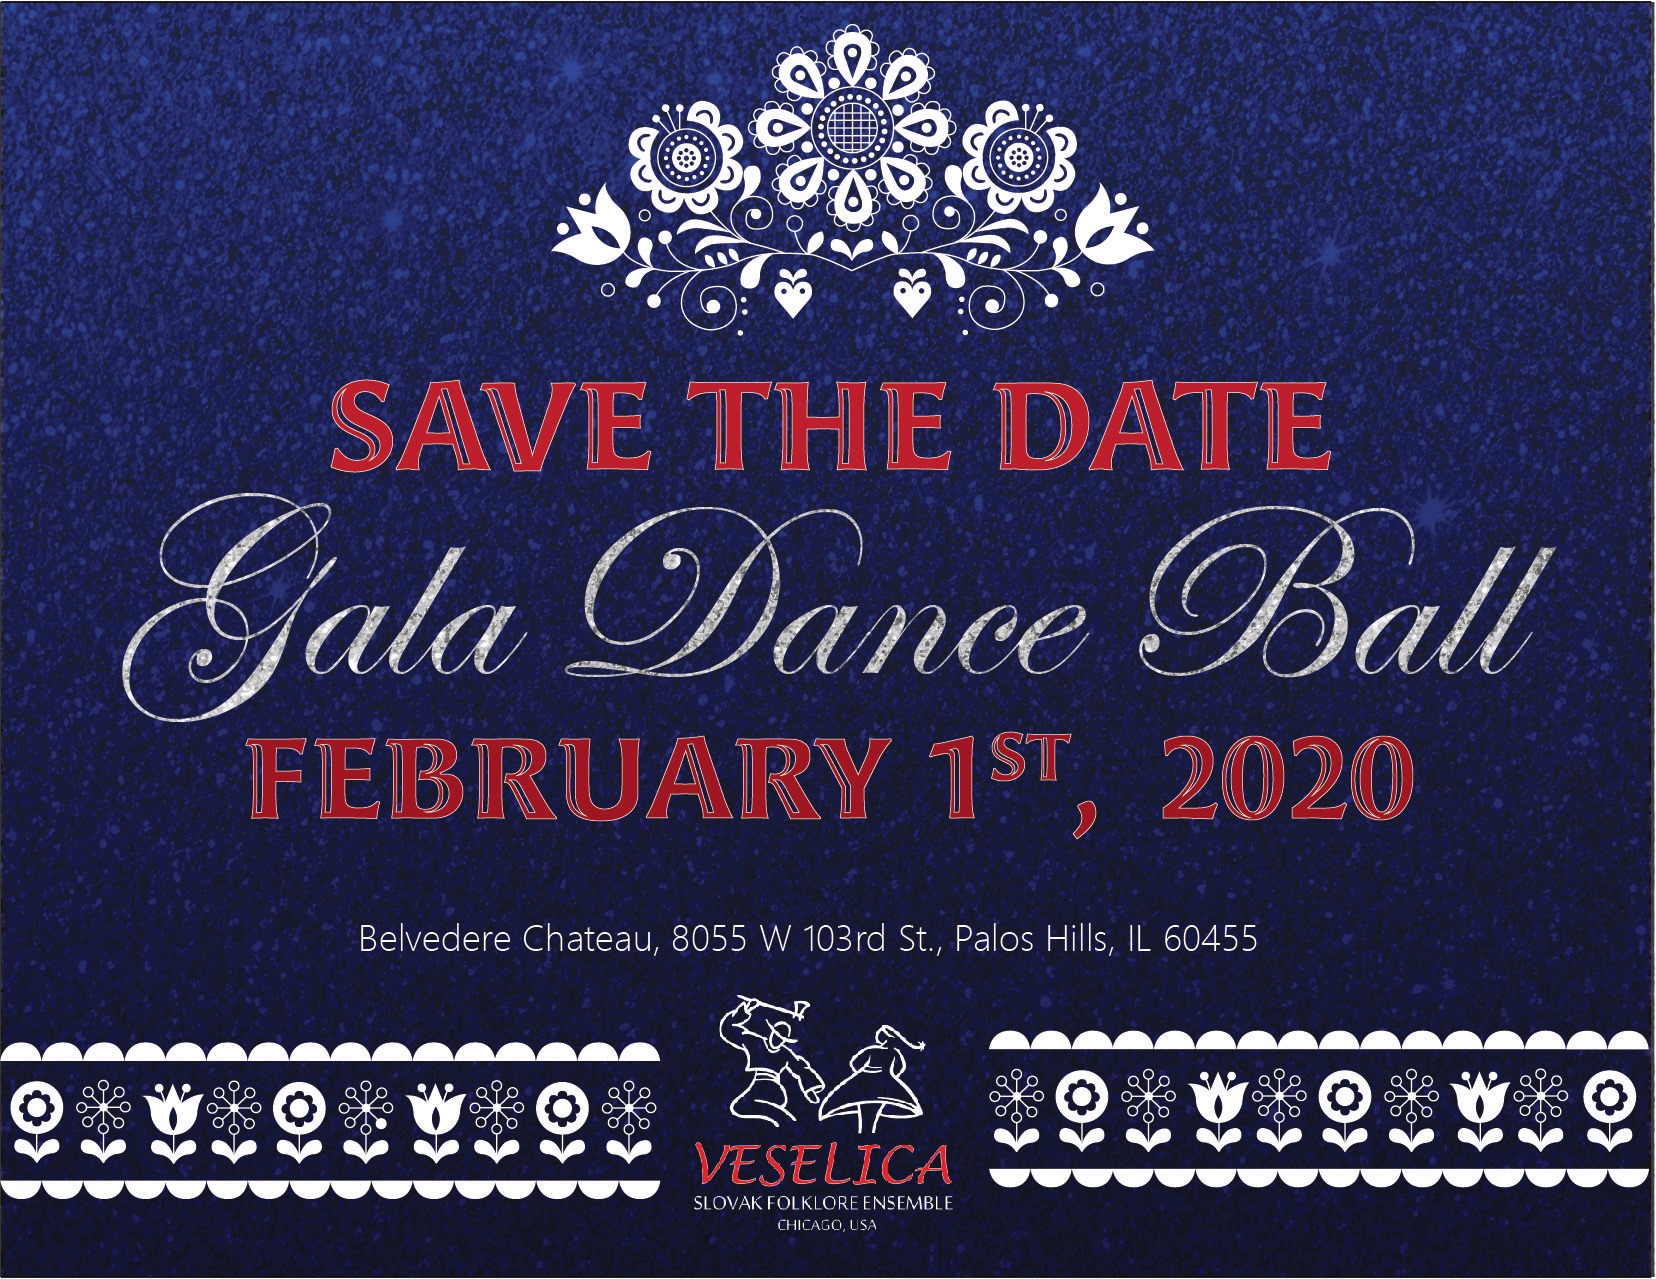 Veselica Gala Dance Ball 2020 Chicago